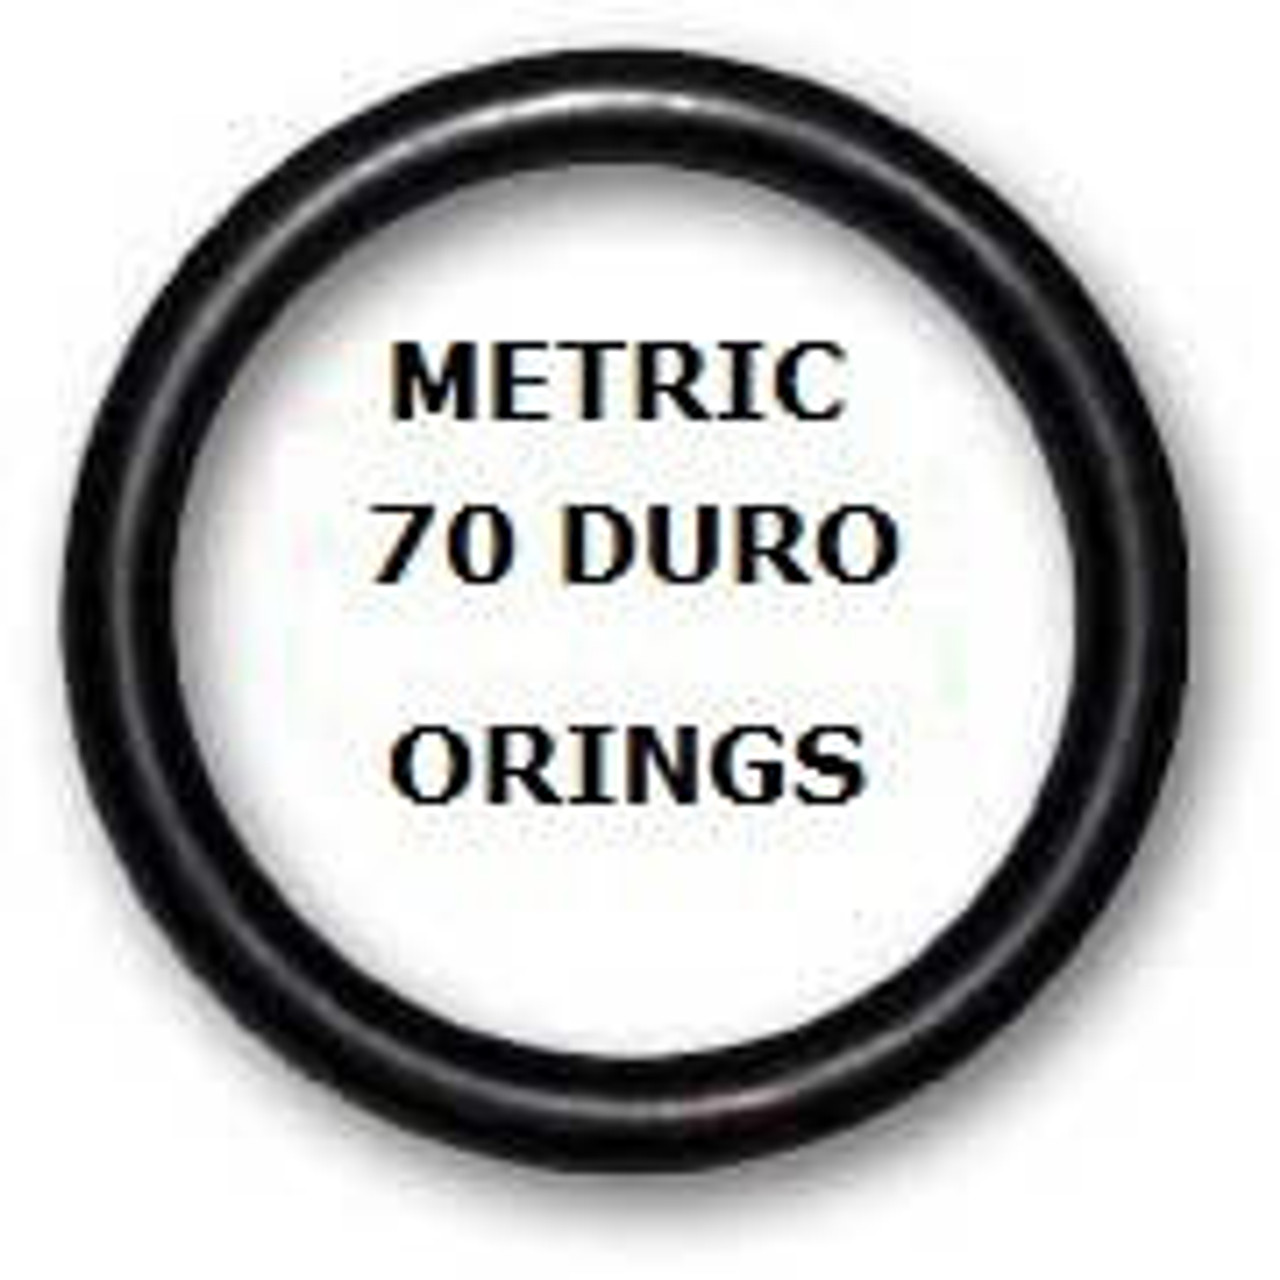 Metric Buna O-rings 419.3 x 5.7mm JIS G420 Price for 1 pc - OringsandMore